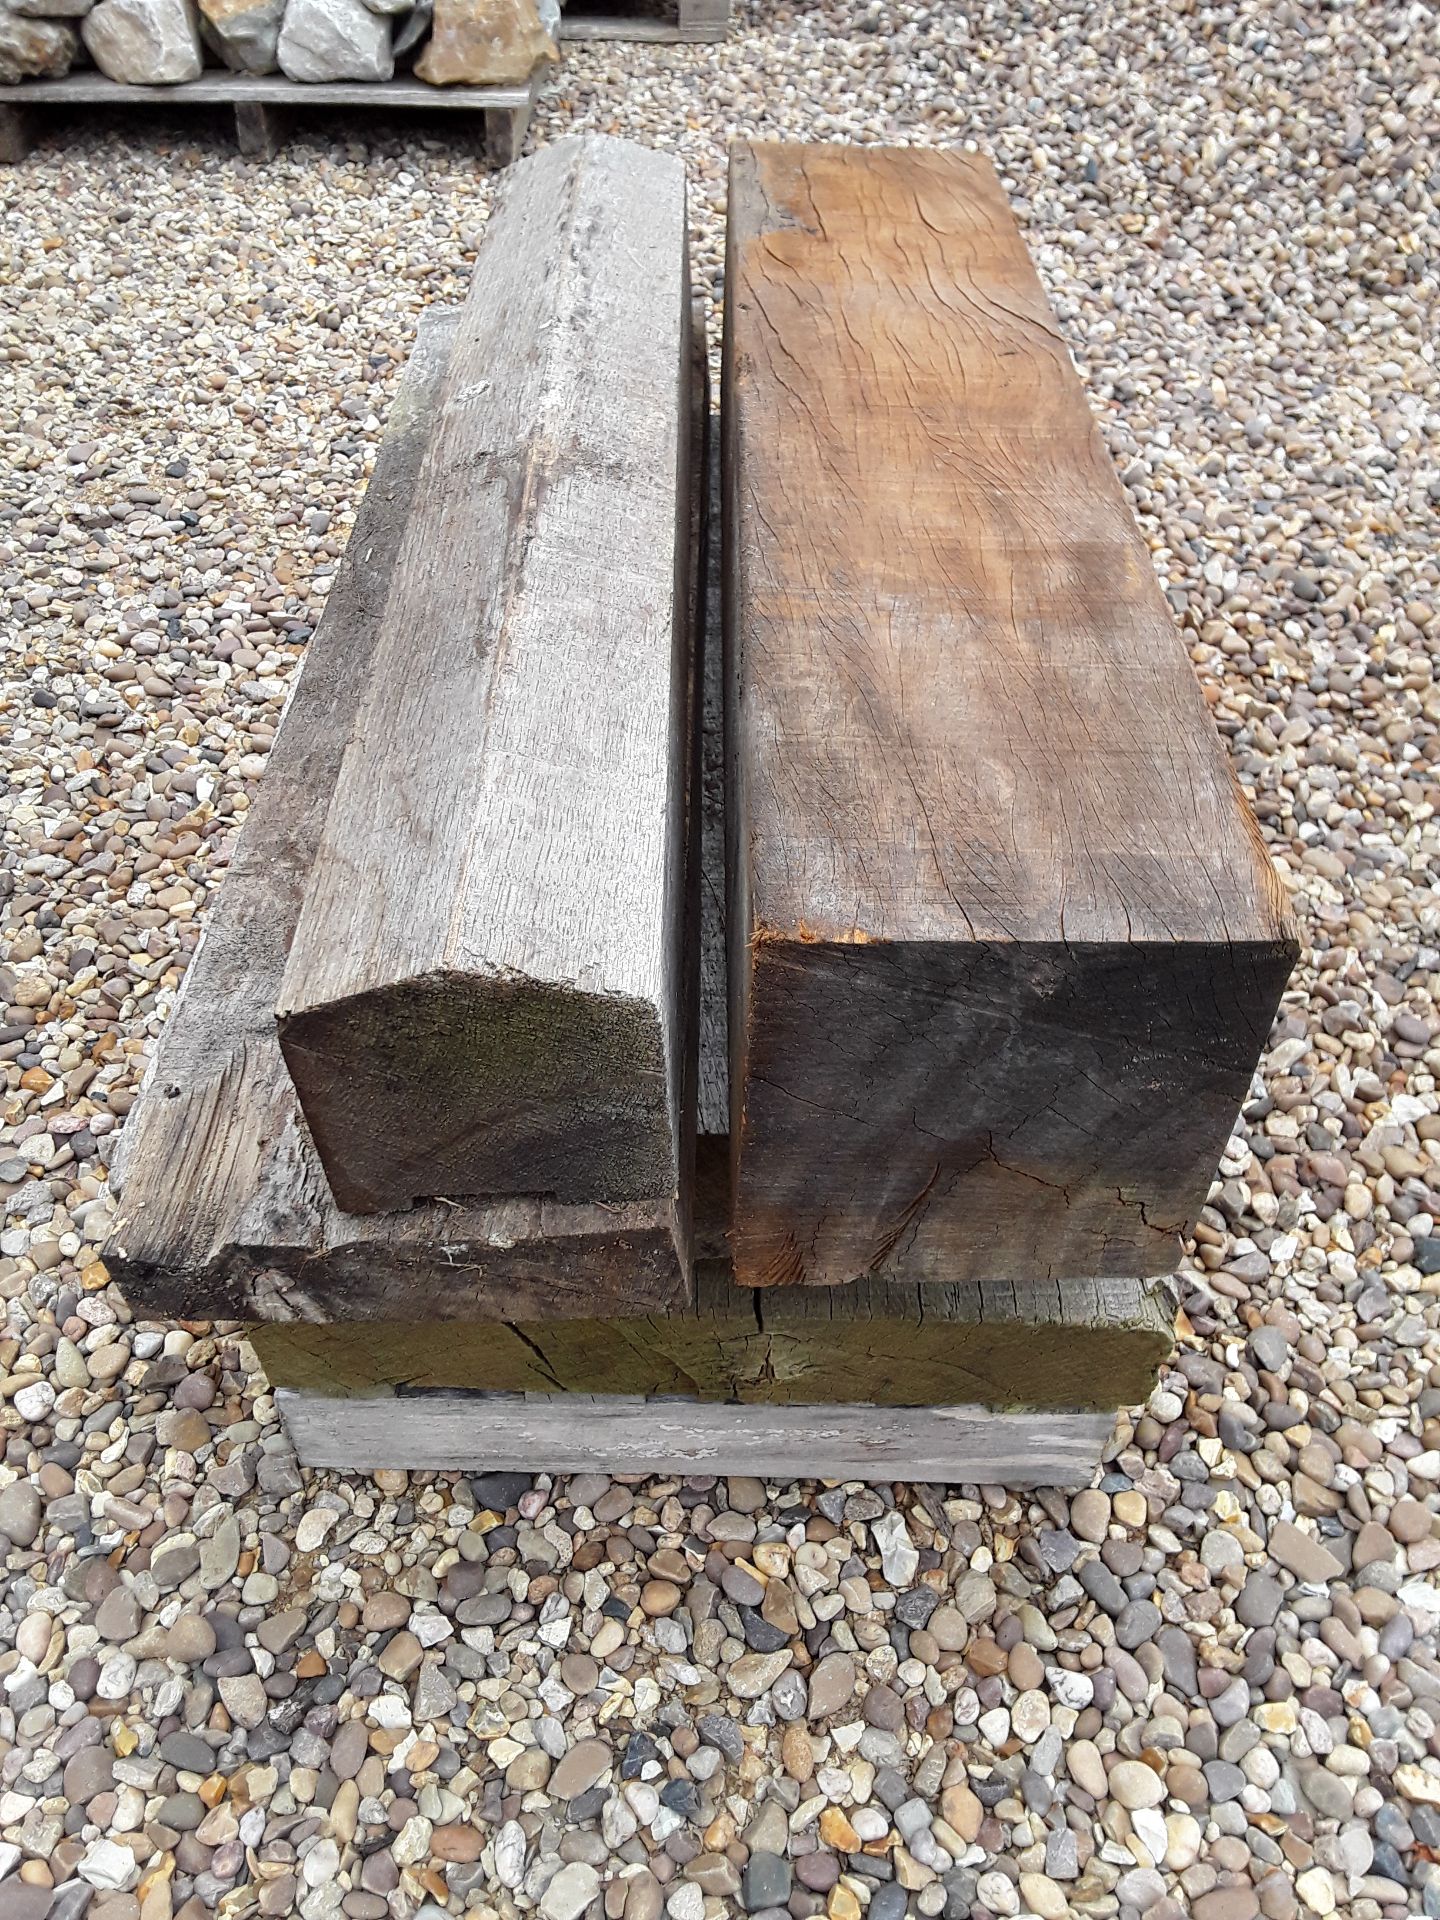 5 x Hardwood Air Dried Sawn Timber Mixed Opepe, Oak, Chestnut Blocks / Beams - Image 3 of 3